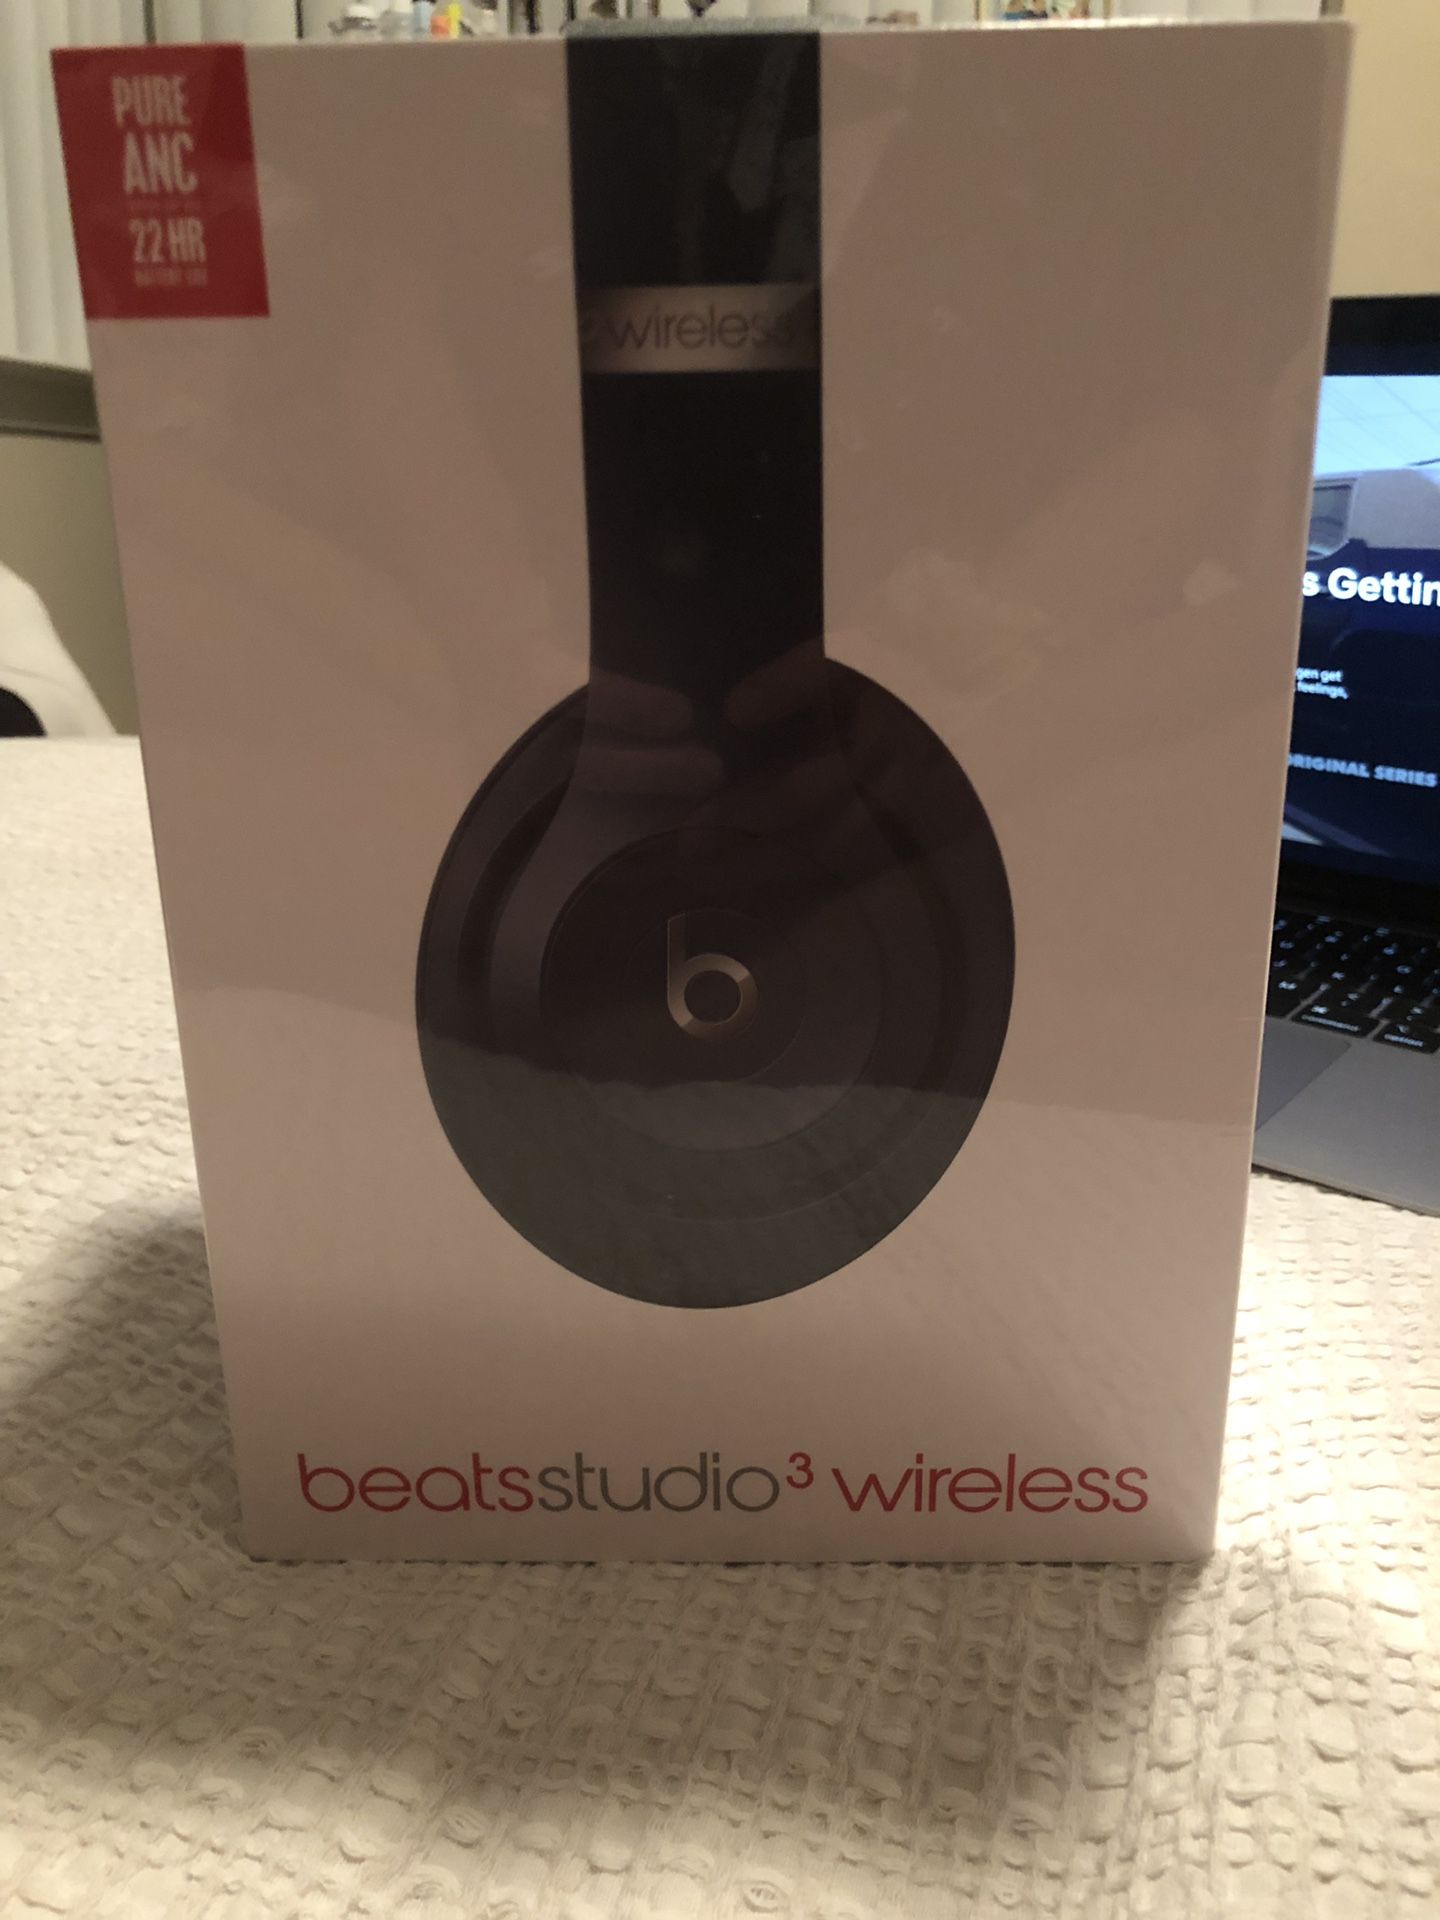 Beats studio 3 wireless headphones (brand new still in original packaging)